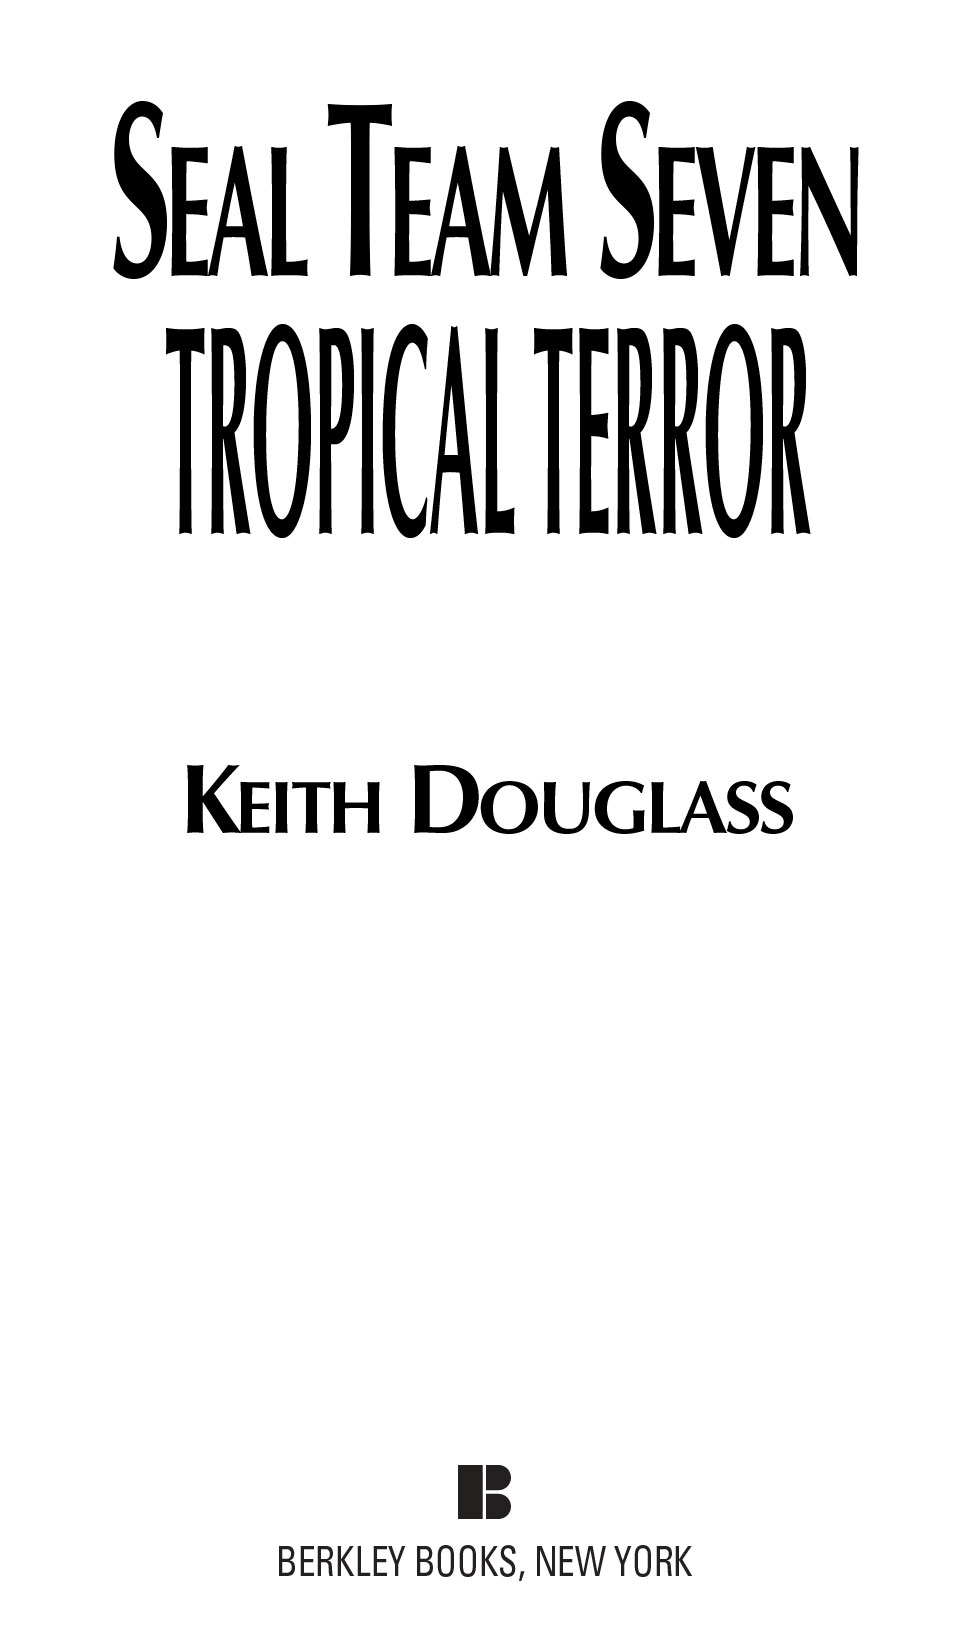 Tropical Terror by Keith Douglass